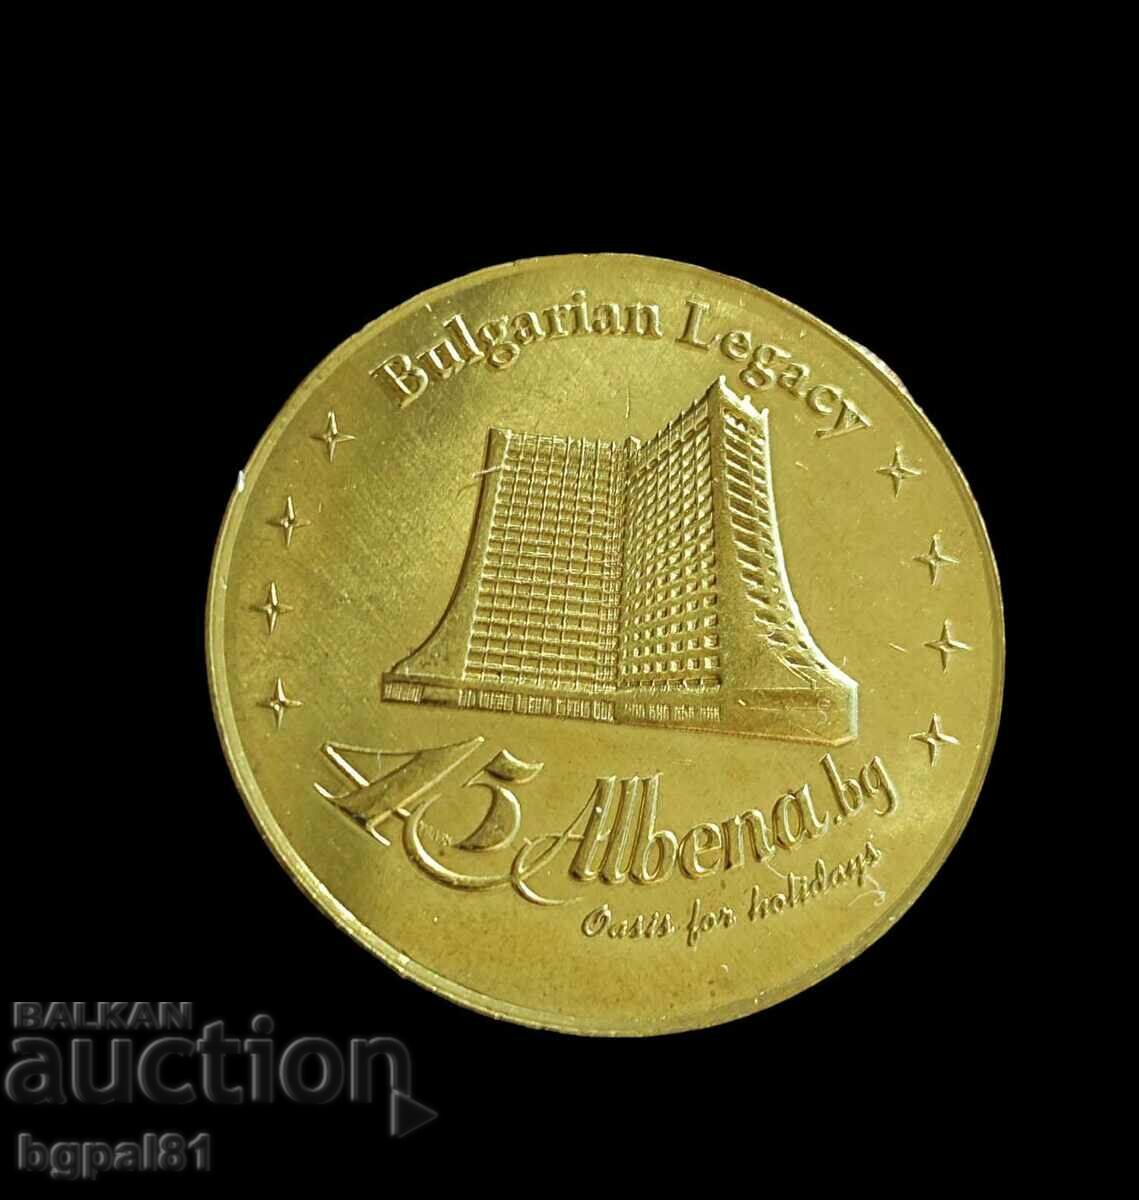 Albena - "Bulgarian legacy" medal issue